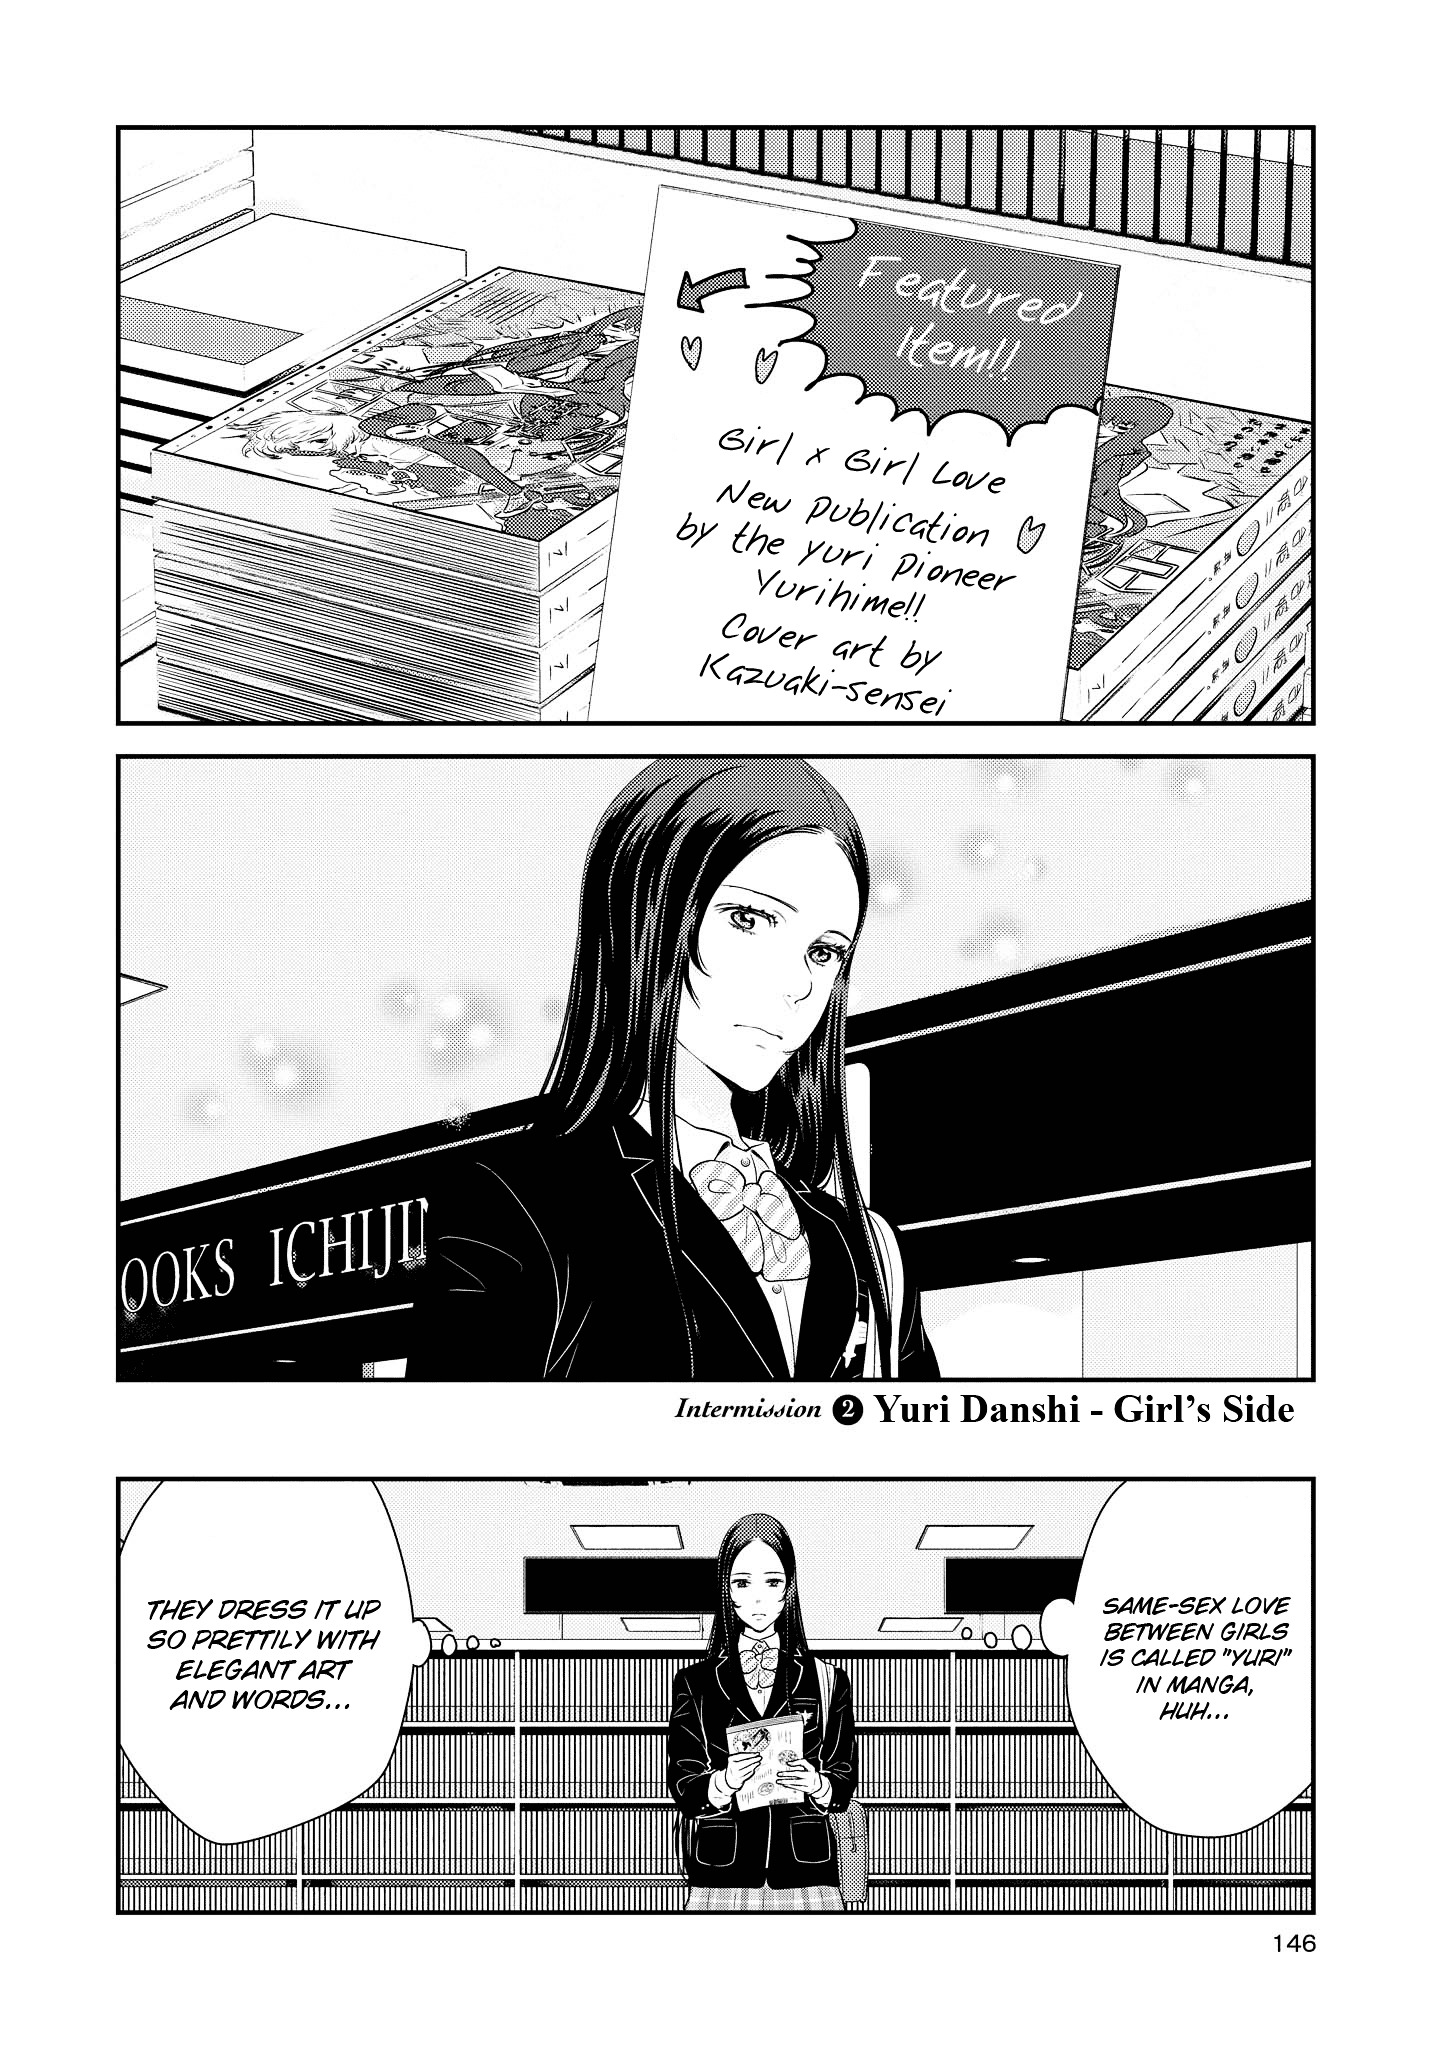 Yuri Danshi - Page 2